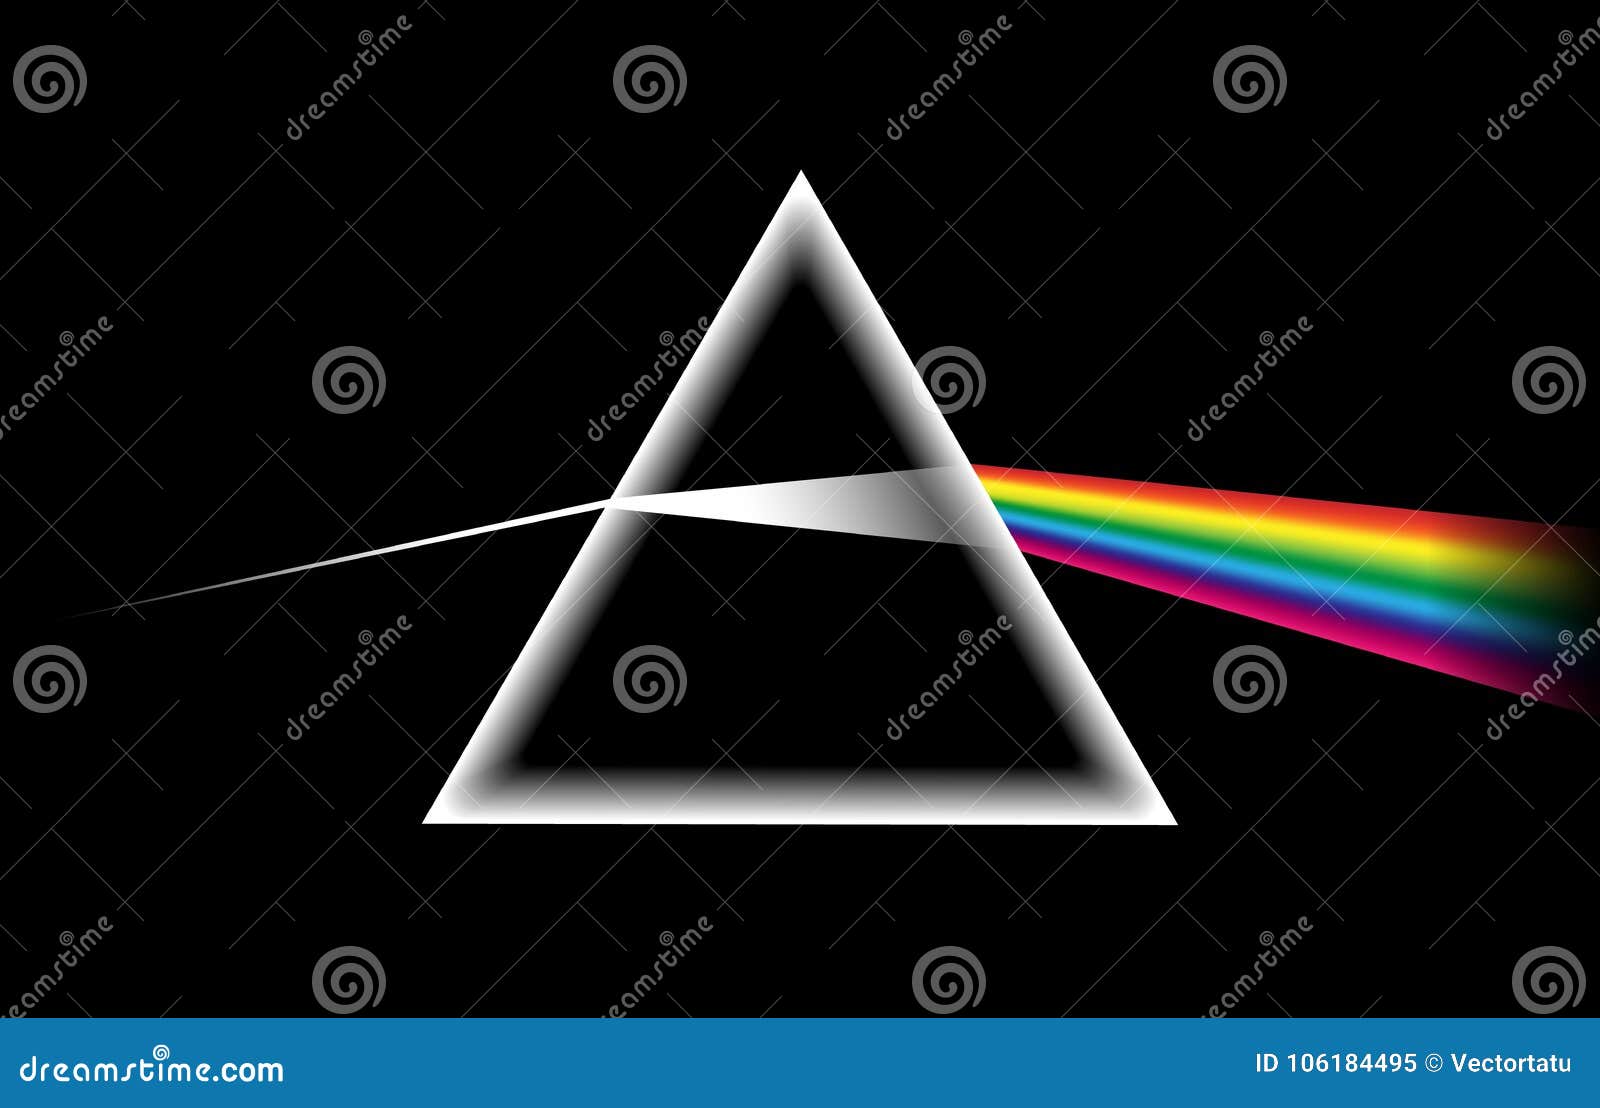 rainbow light prism